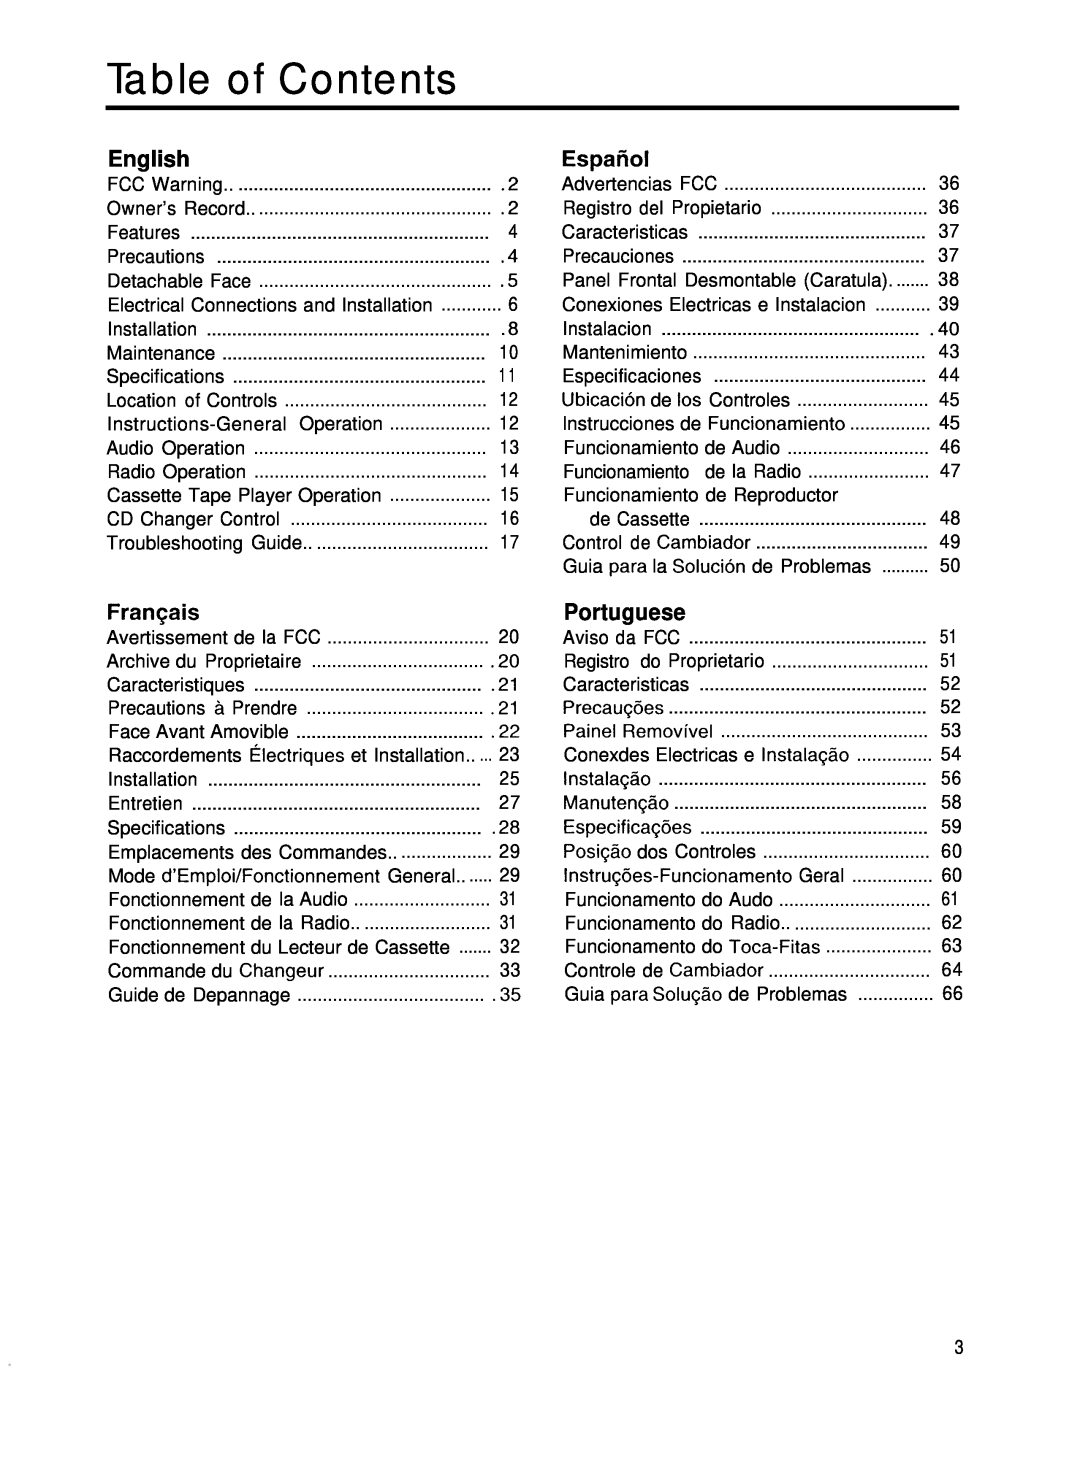 Blaupunkt CR67 manual Table of Contents, English, Espaiiol, FranGais, Portuguese 